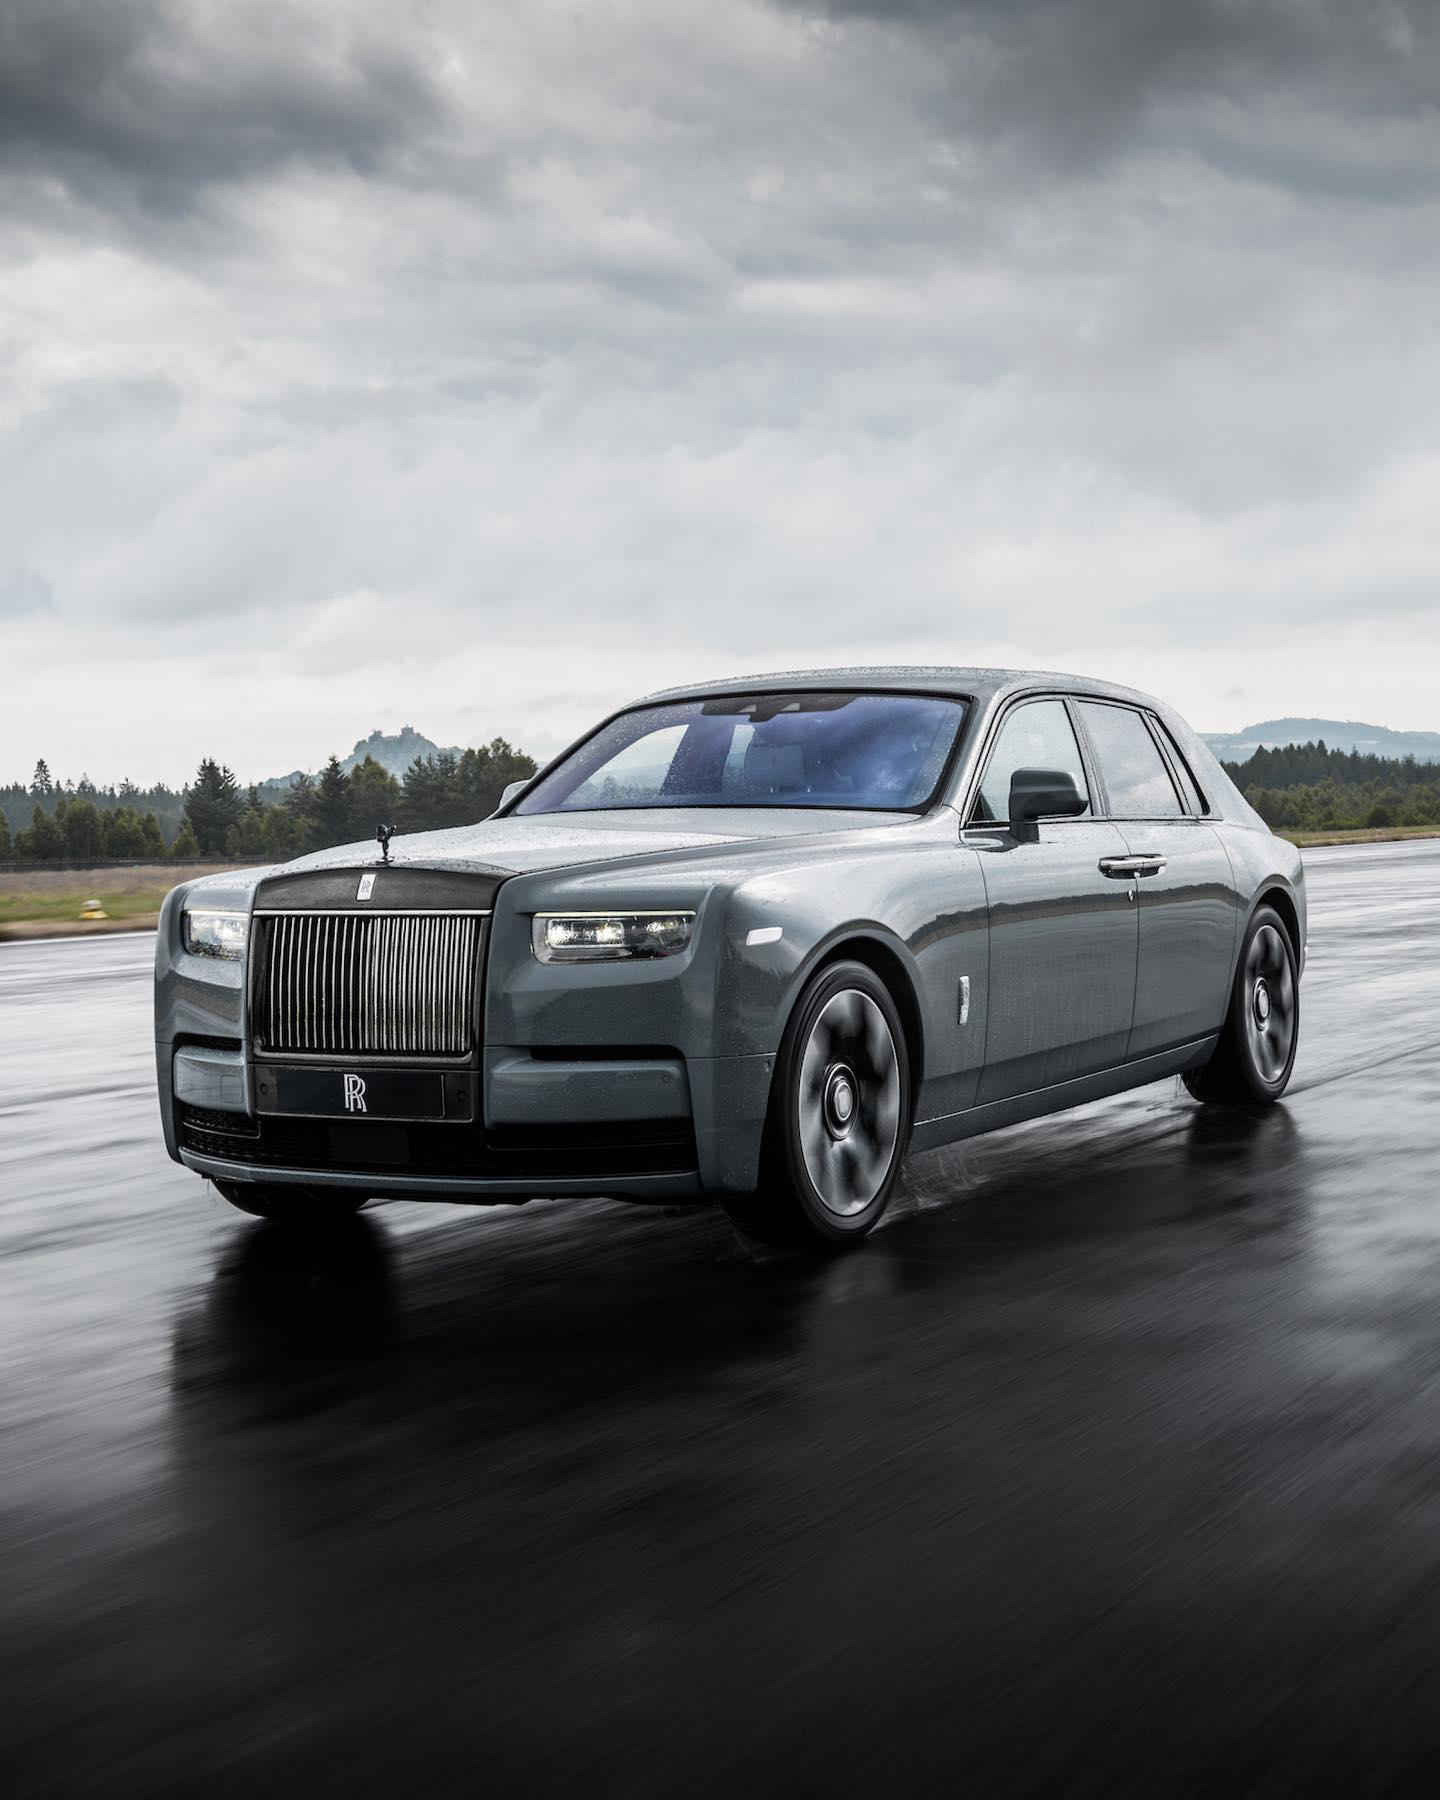 Rolls-Royce Motor Cars - A maverick spirit